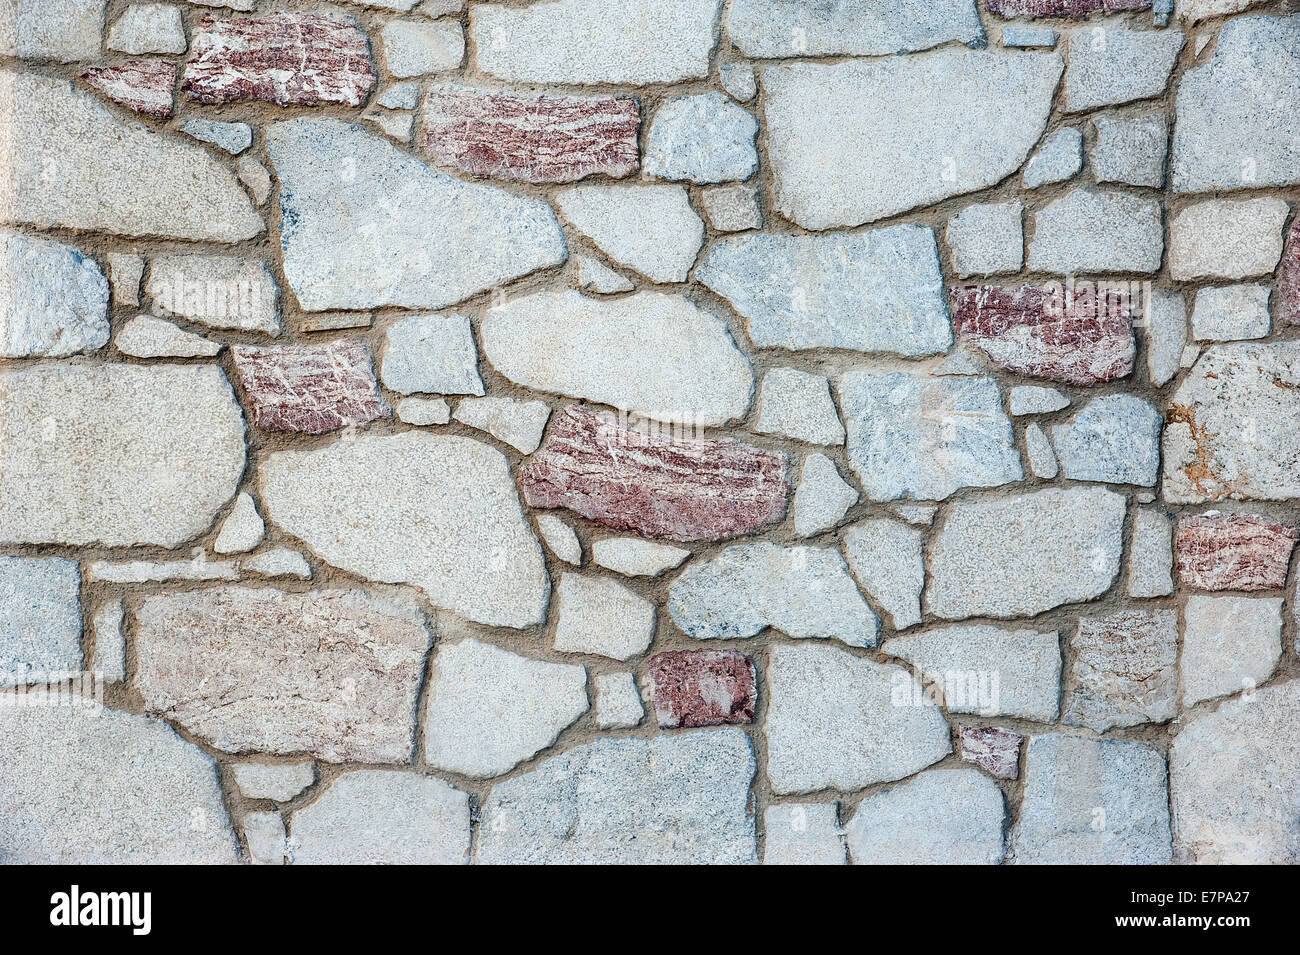 Stacked stone wall background horizontal Stock Photo